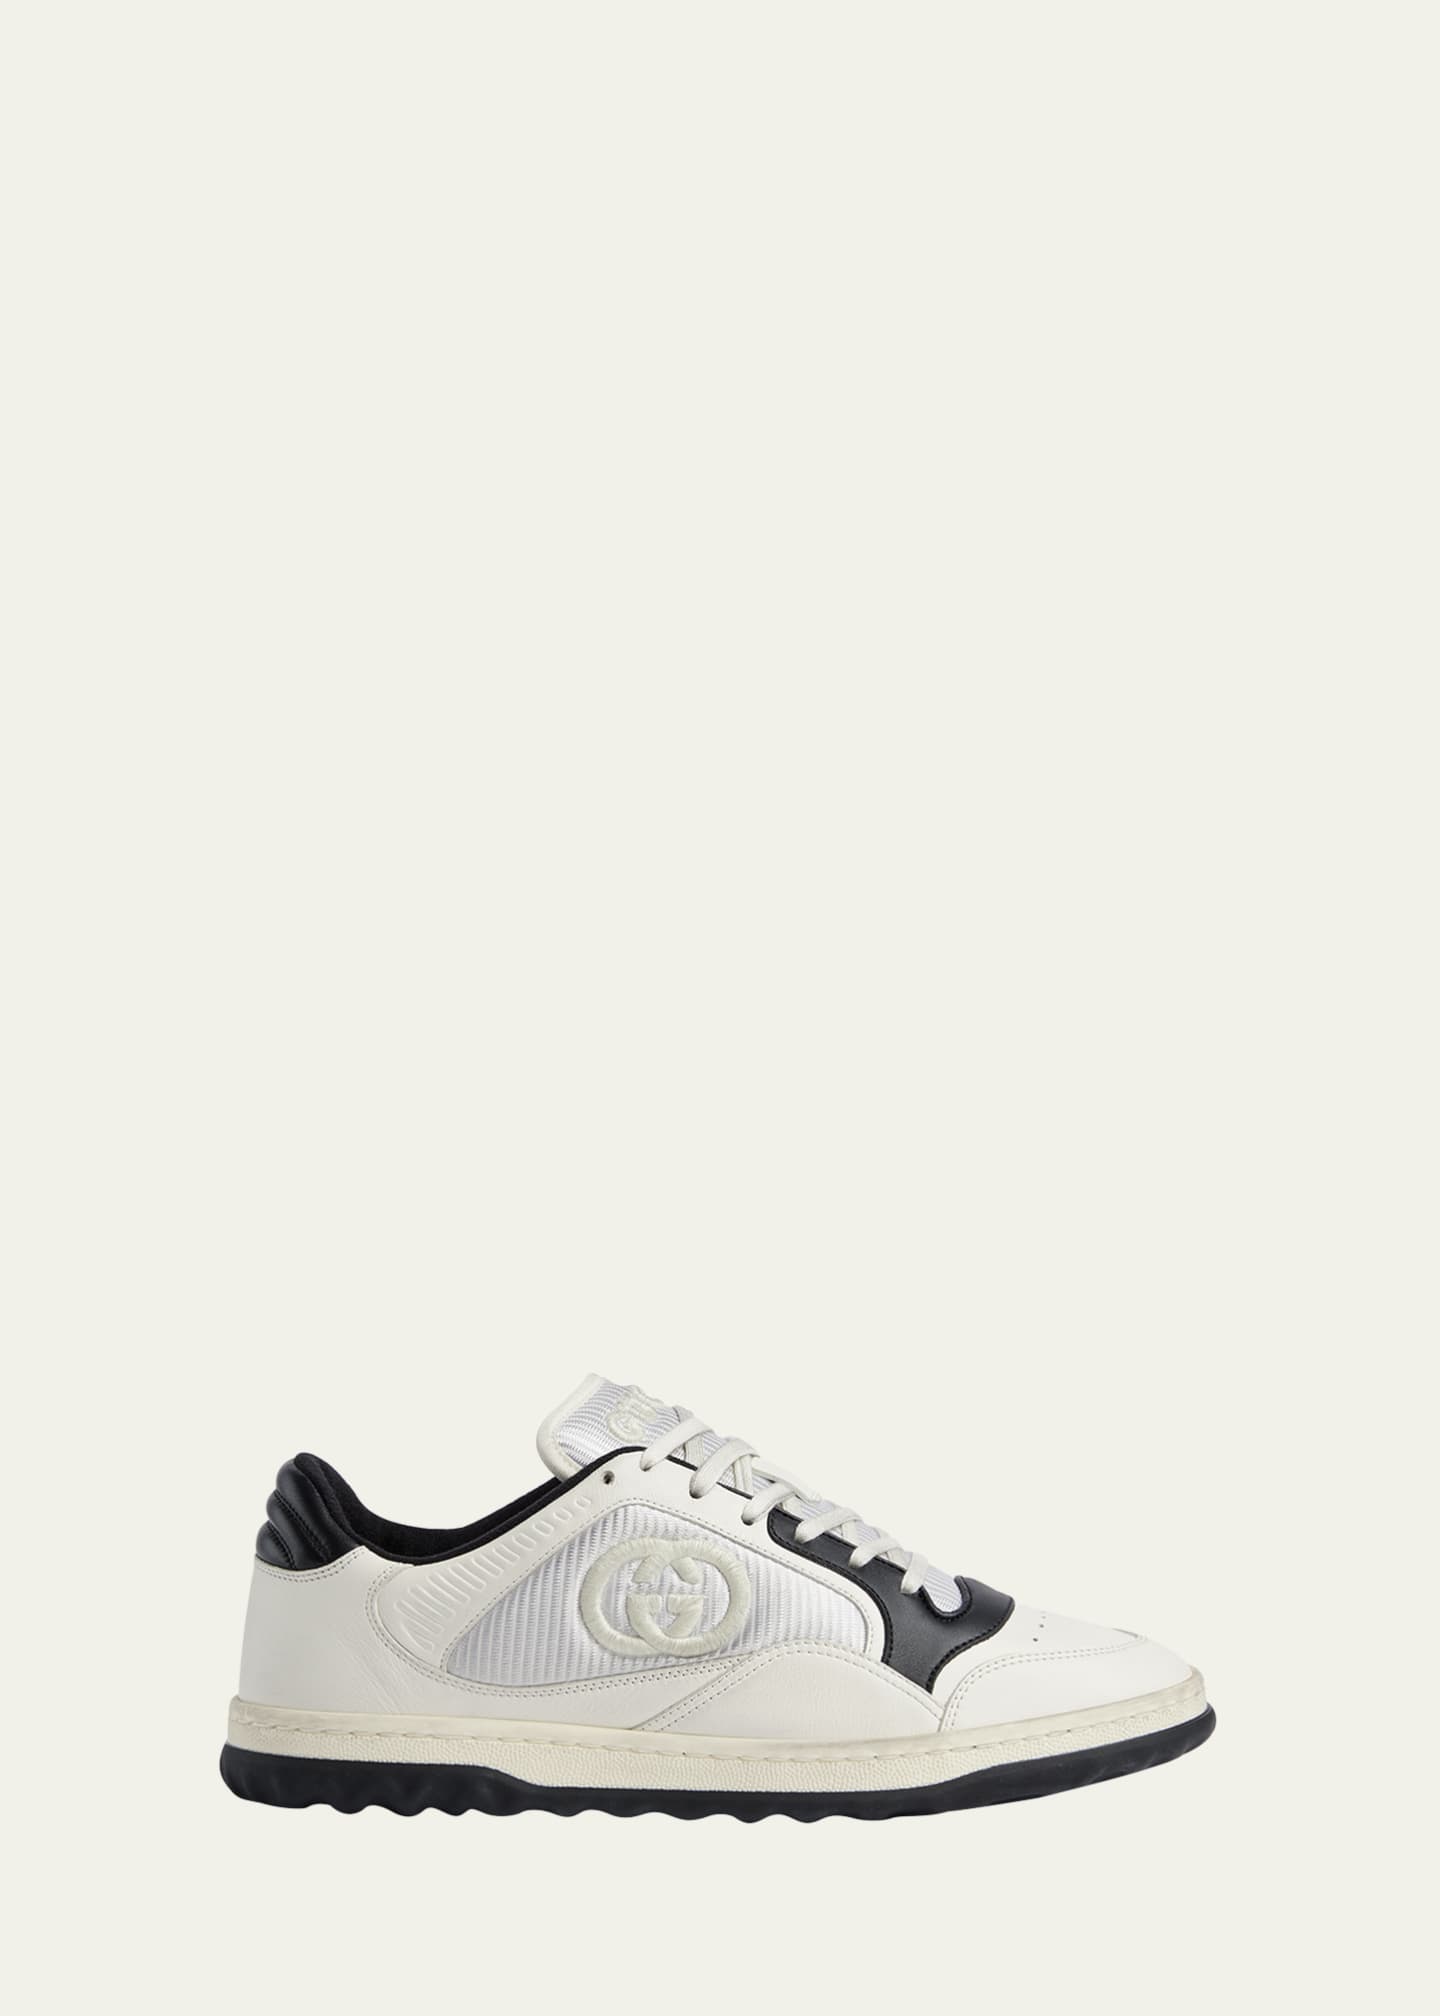 Gucci Mac80 High-Top Sneakers - Black